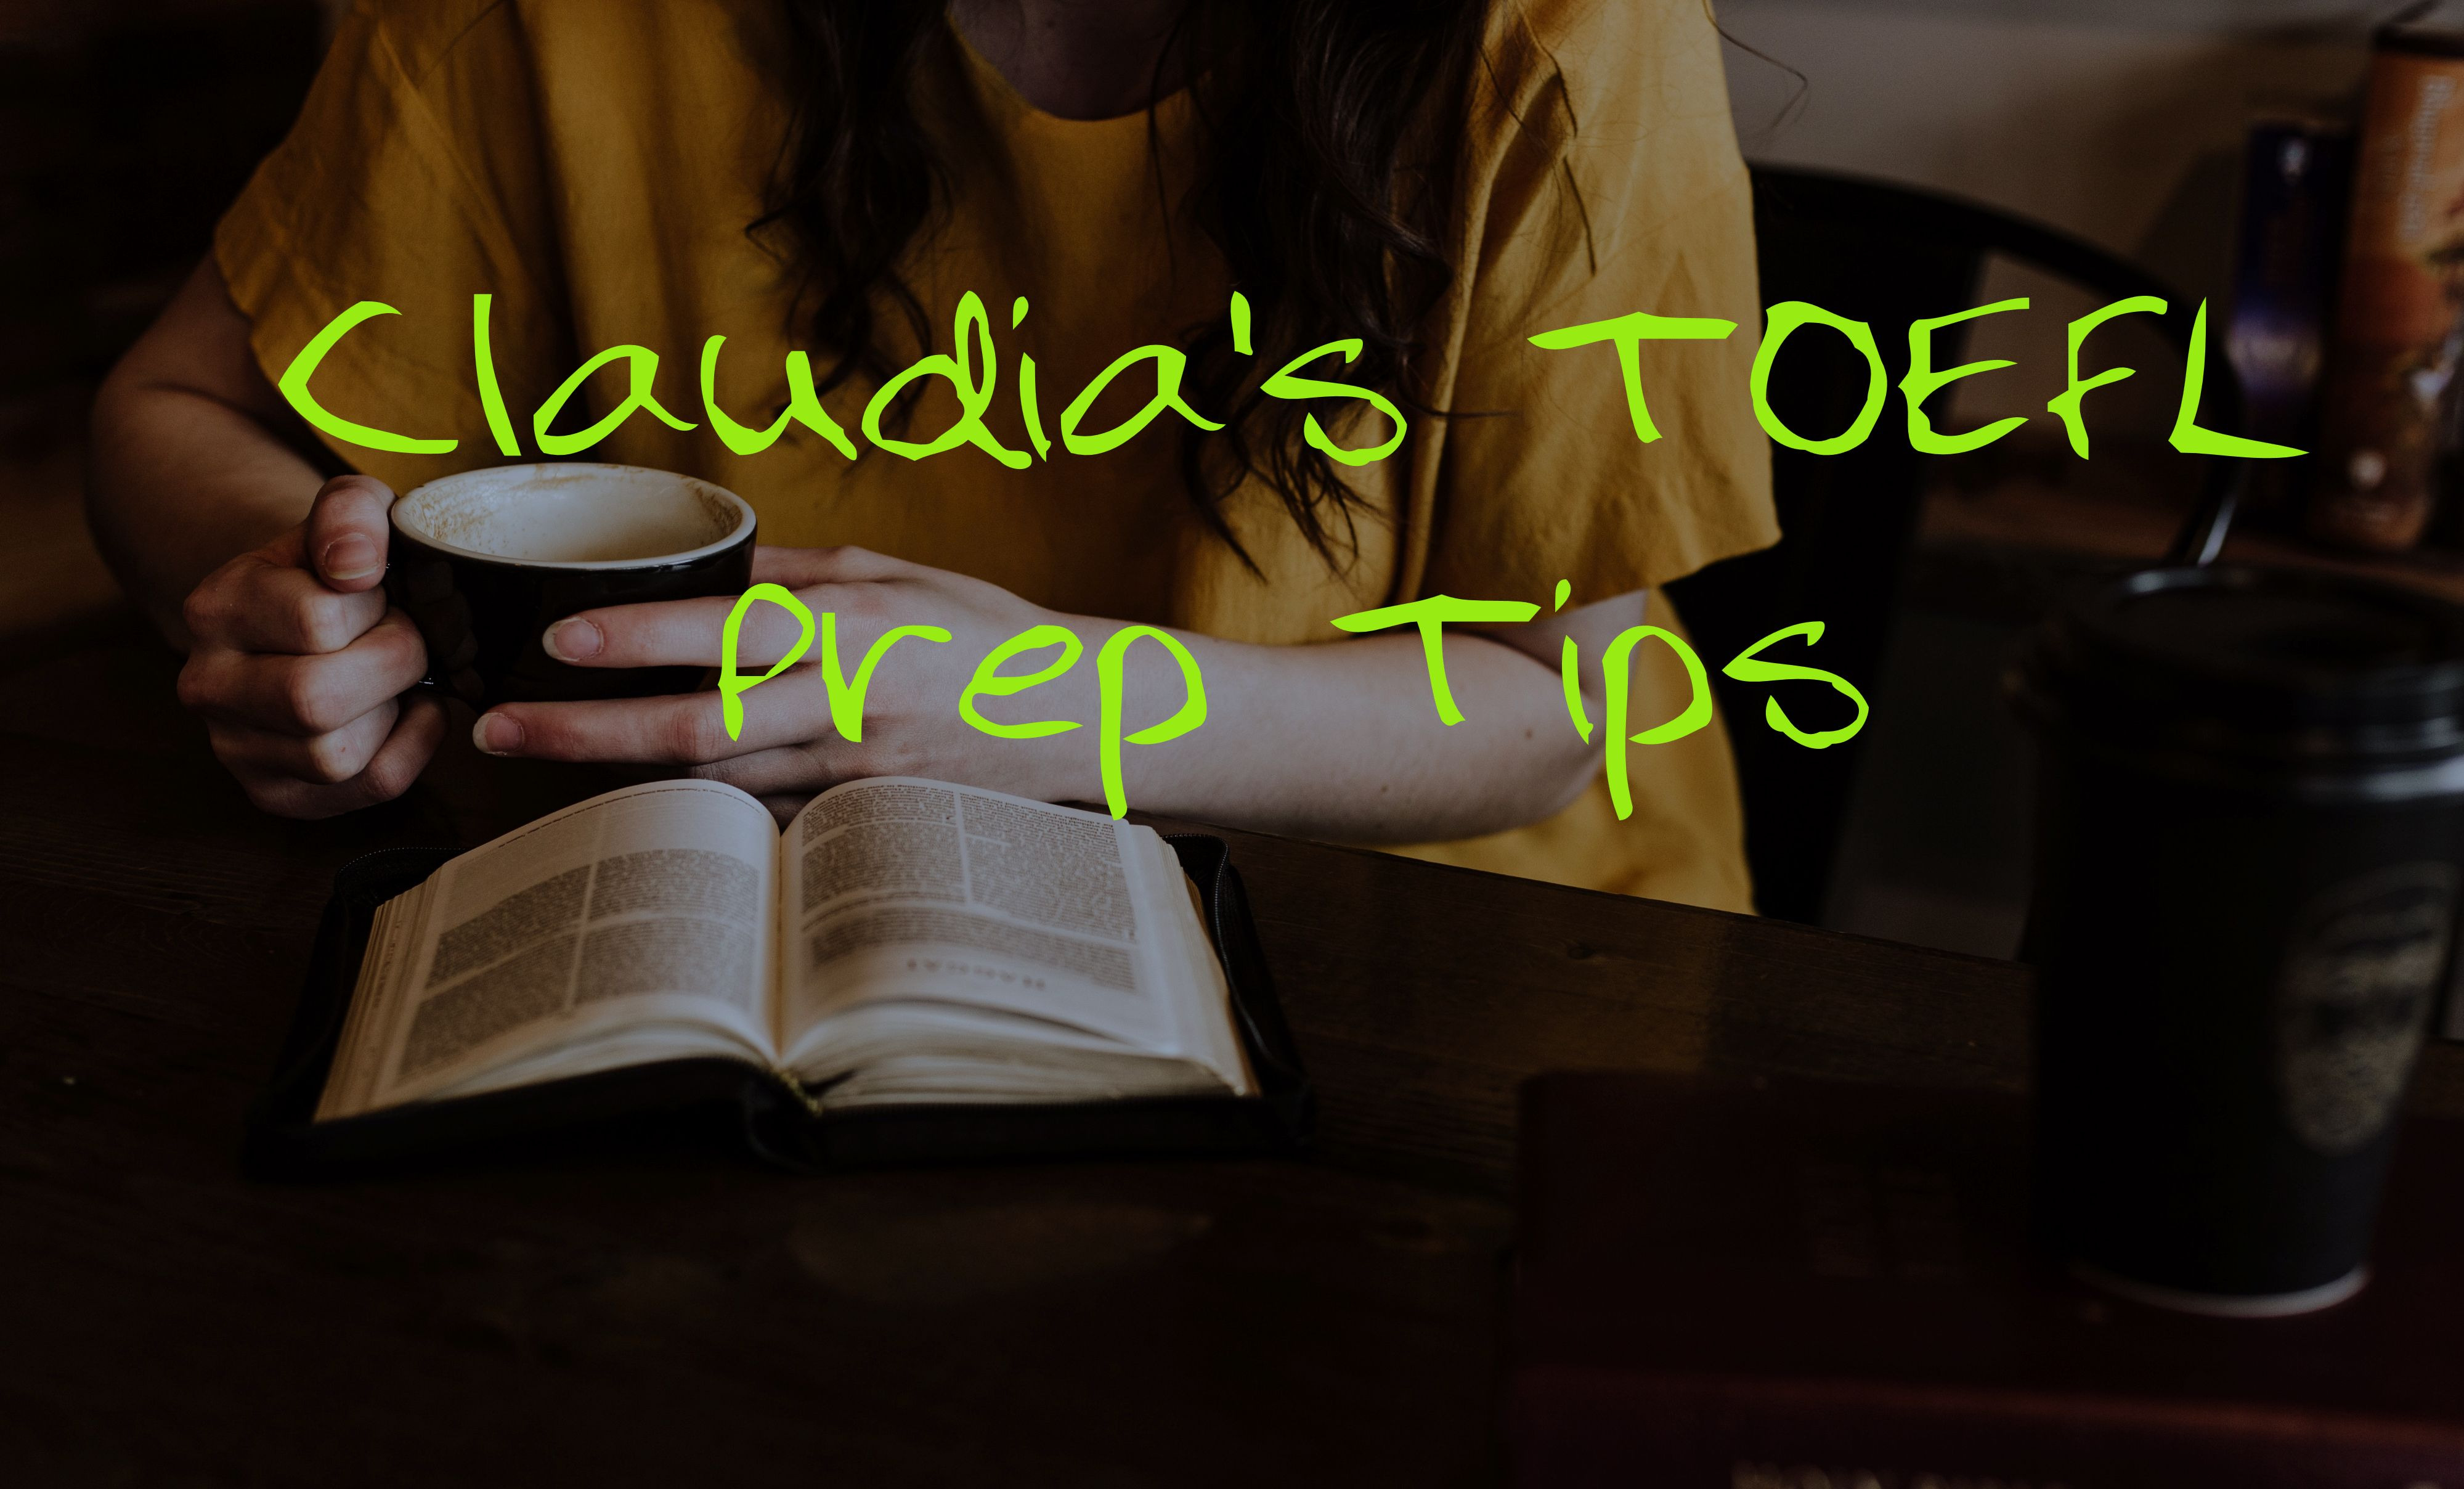 Claudia’s TOEFL Prep Tips